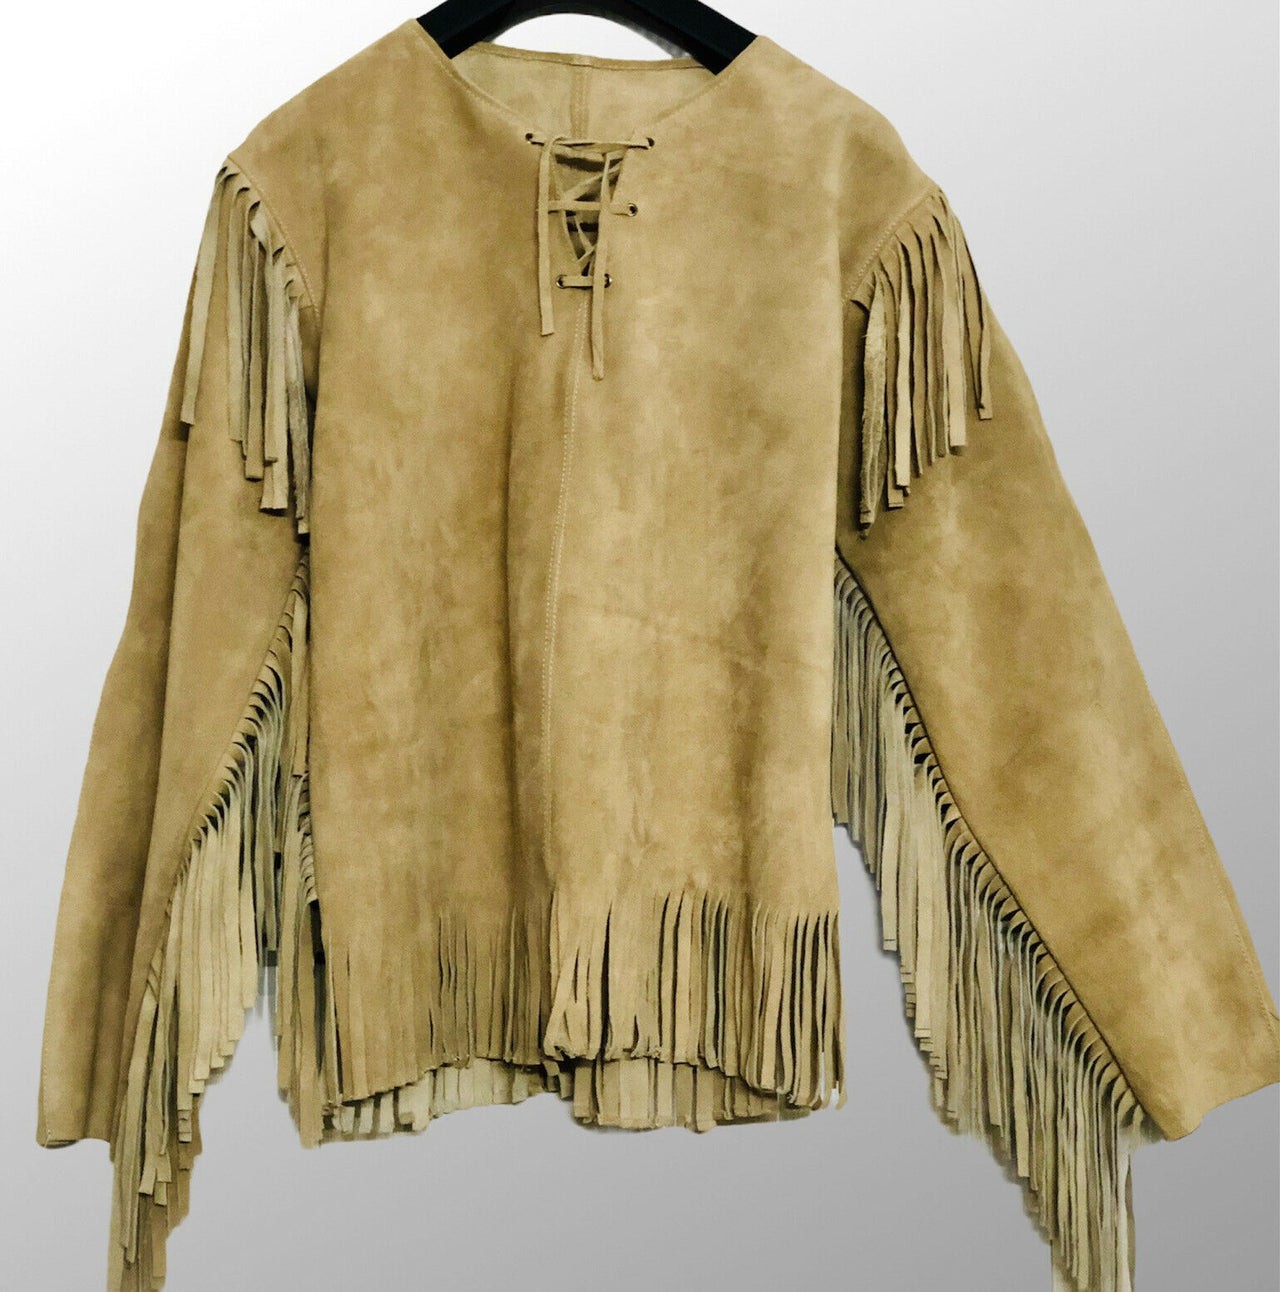 Western Wear Buckskin Suede Leather Fringes Jacket Native American War Shirt